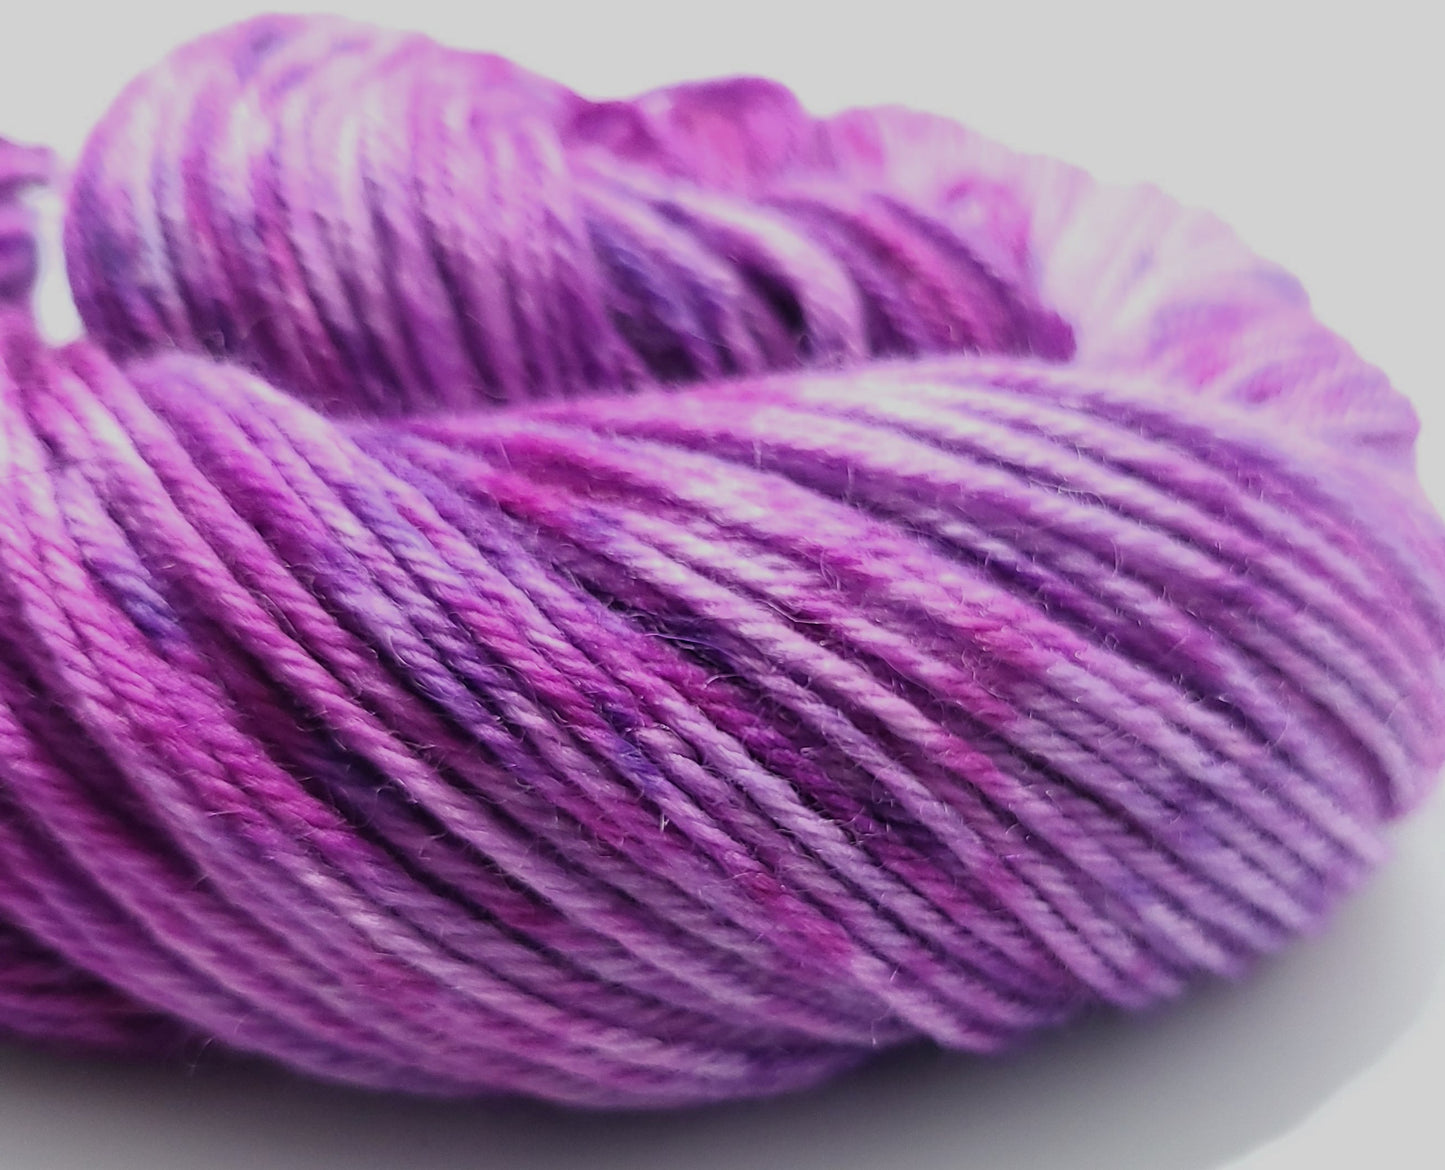 Lilac 2: Electric Boogaloo - 100% Highland Wool